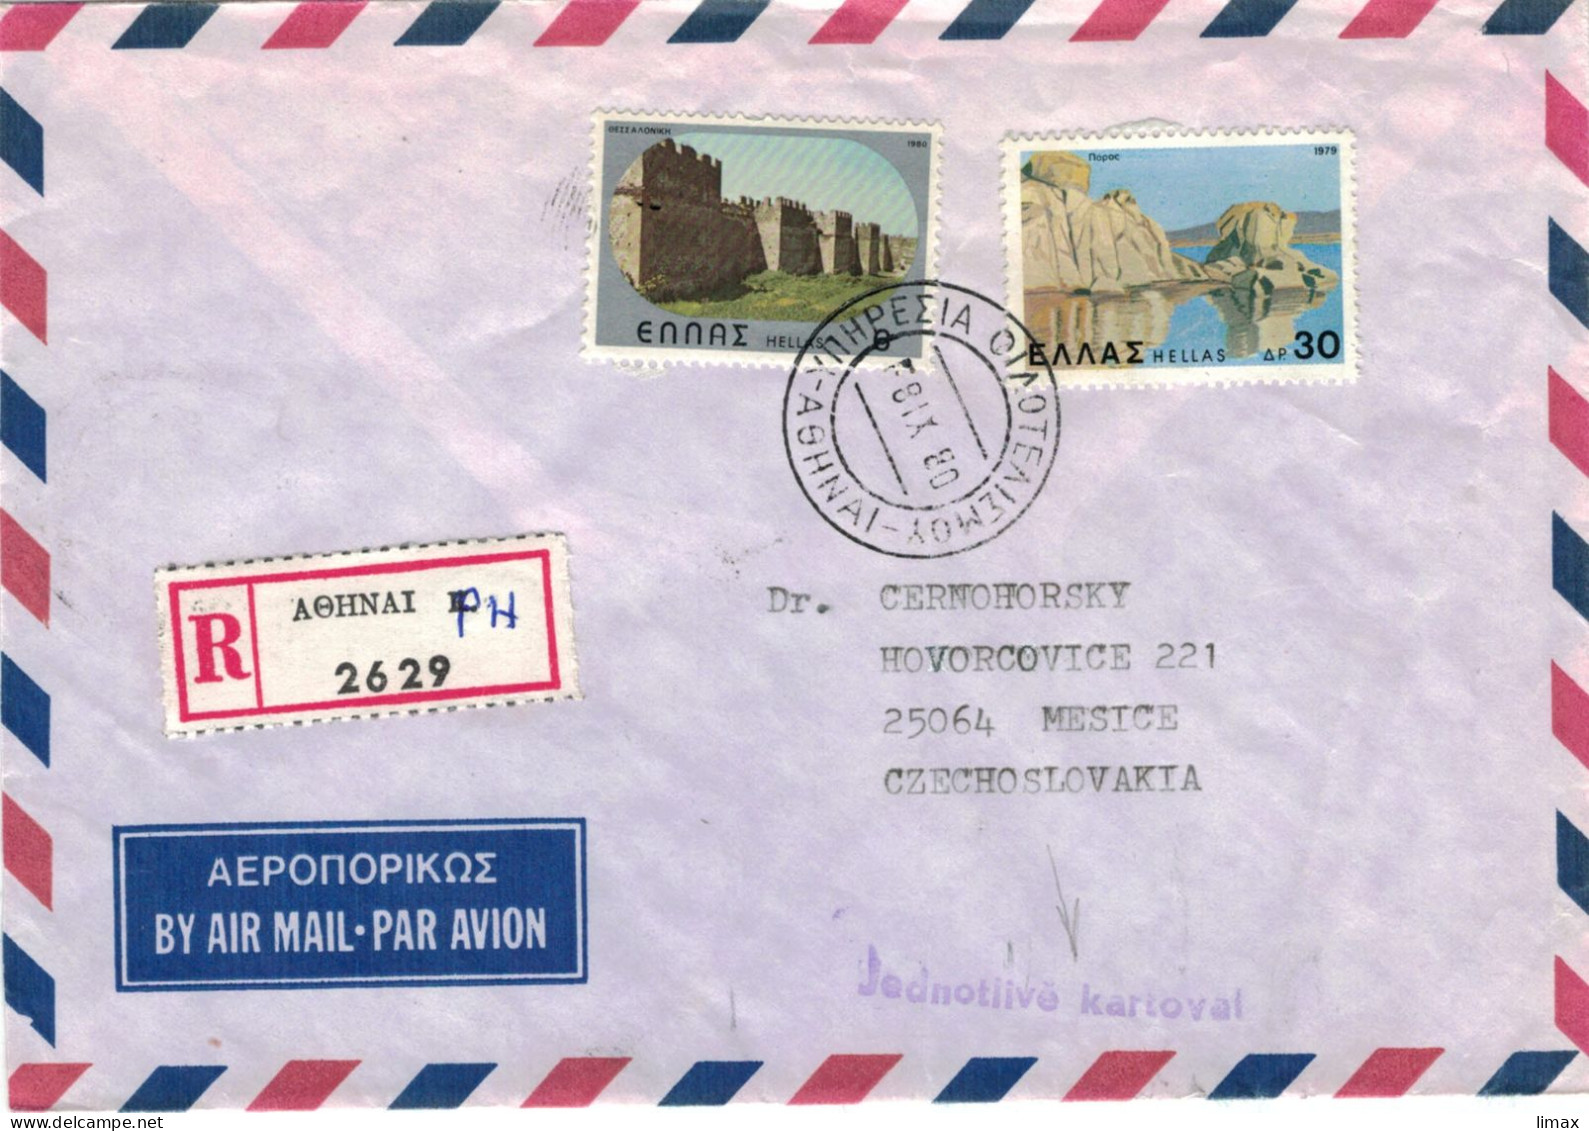 Reko Athen 1980 > Mesice - Jednotlive Kartoval - Einzeln Abgefertigt? Zensur? - "Kolybithres", Paros - Thessaloniki - Lettres & Documents